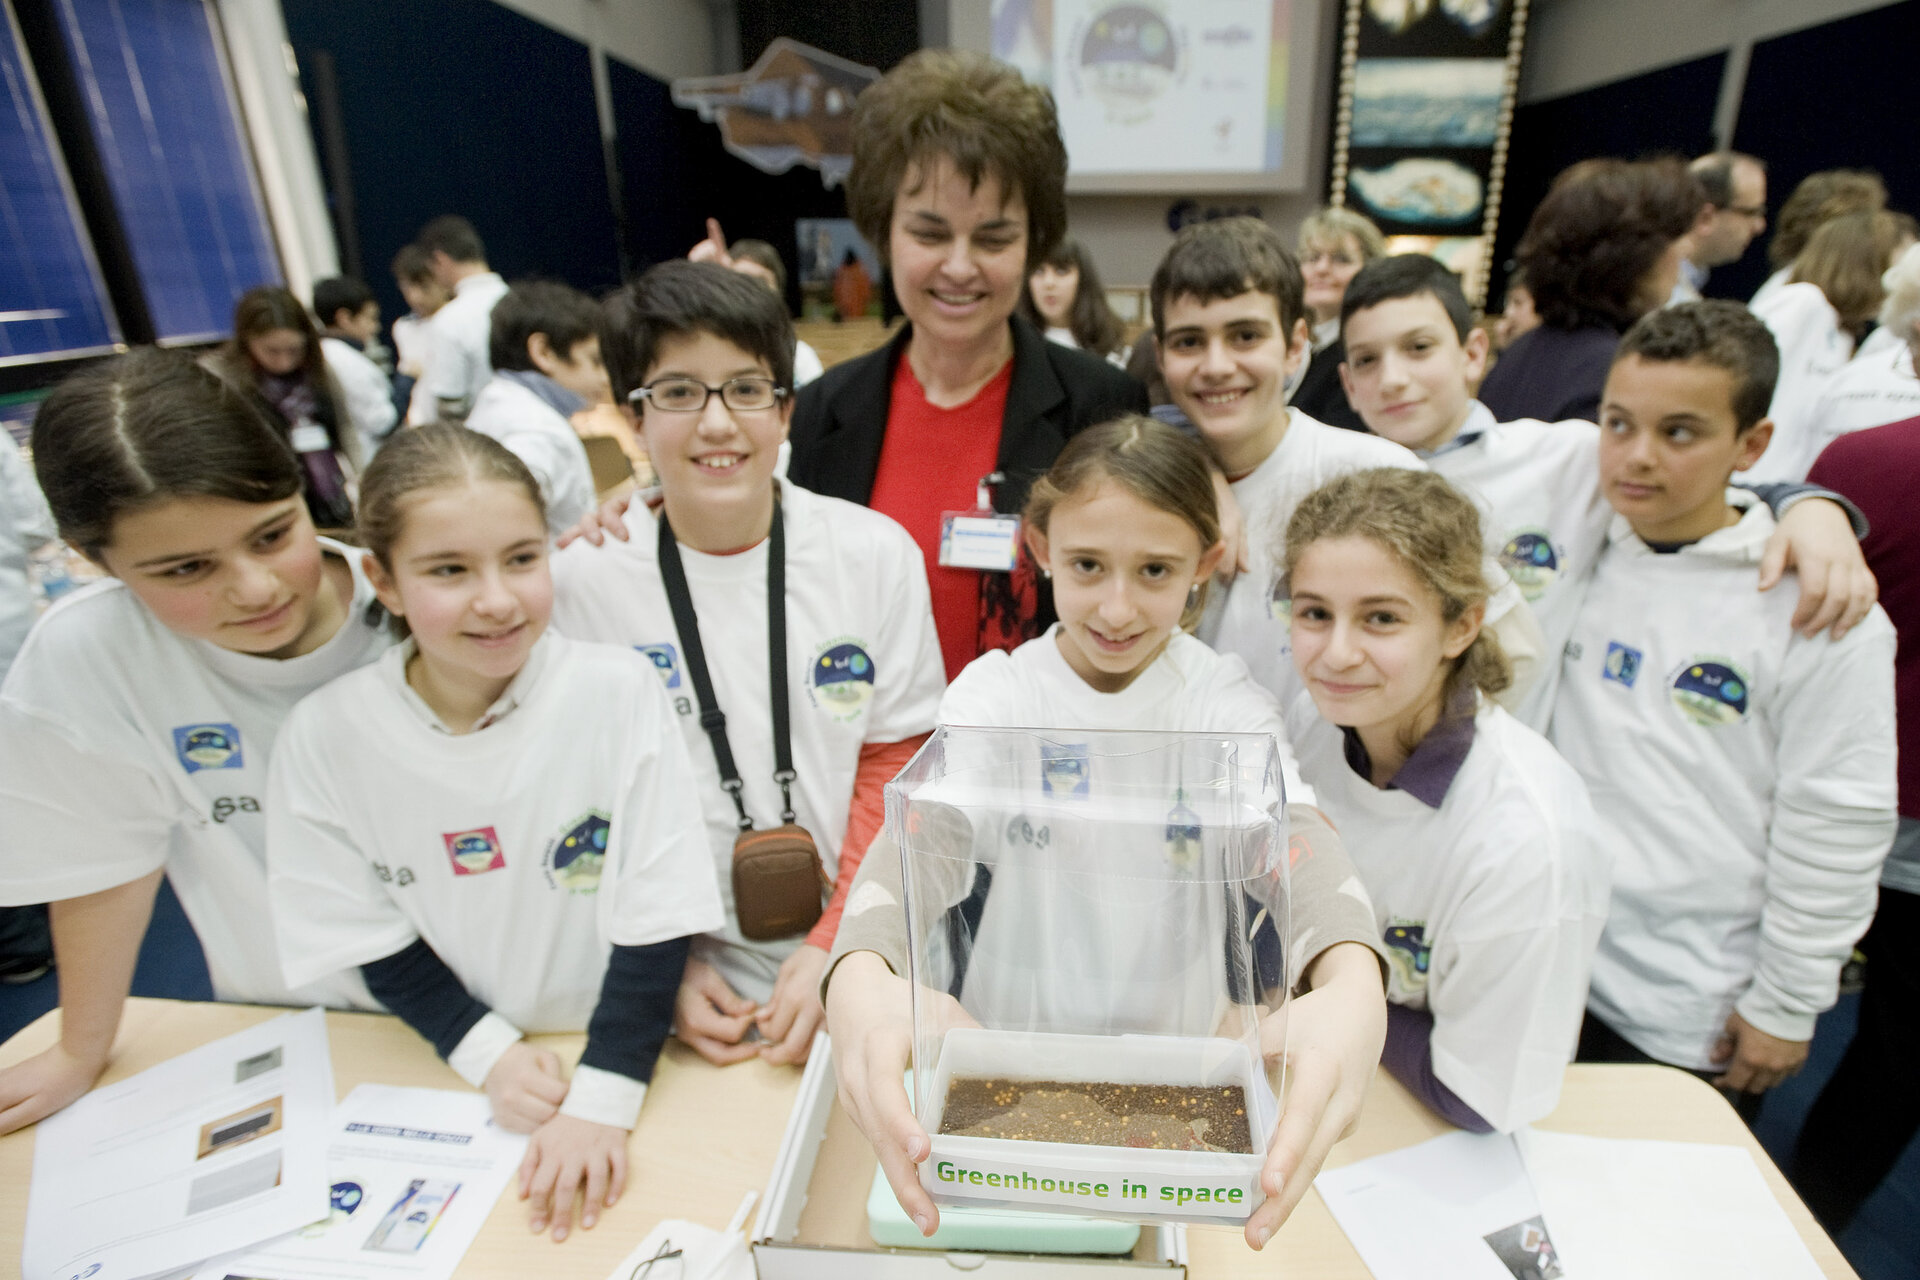 Italian schoolchildren at the Greenhouse in Space event